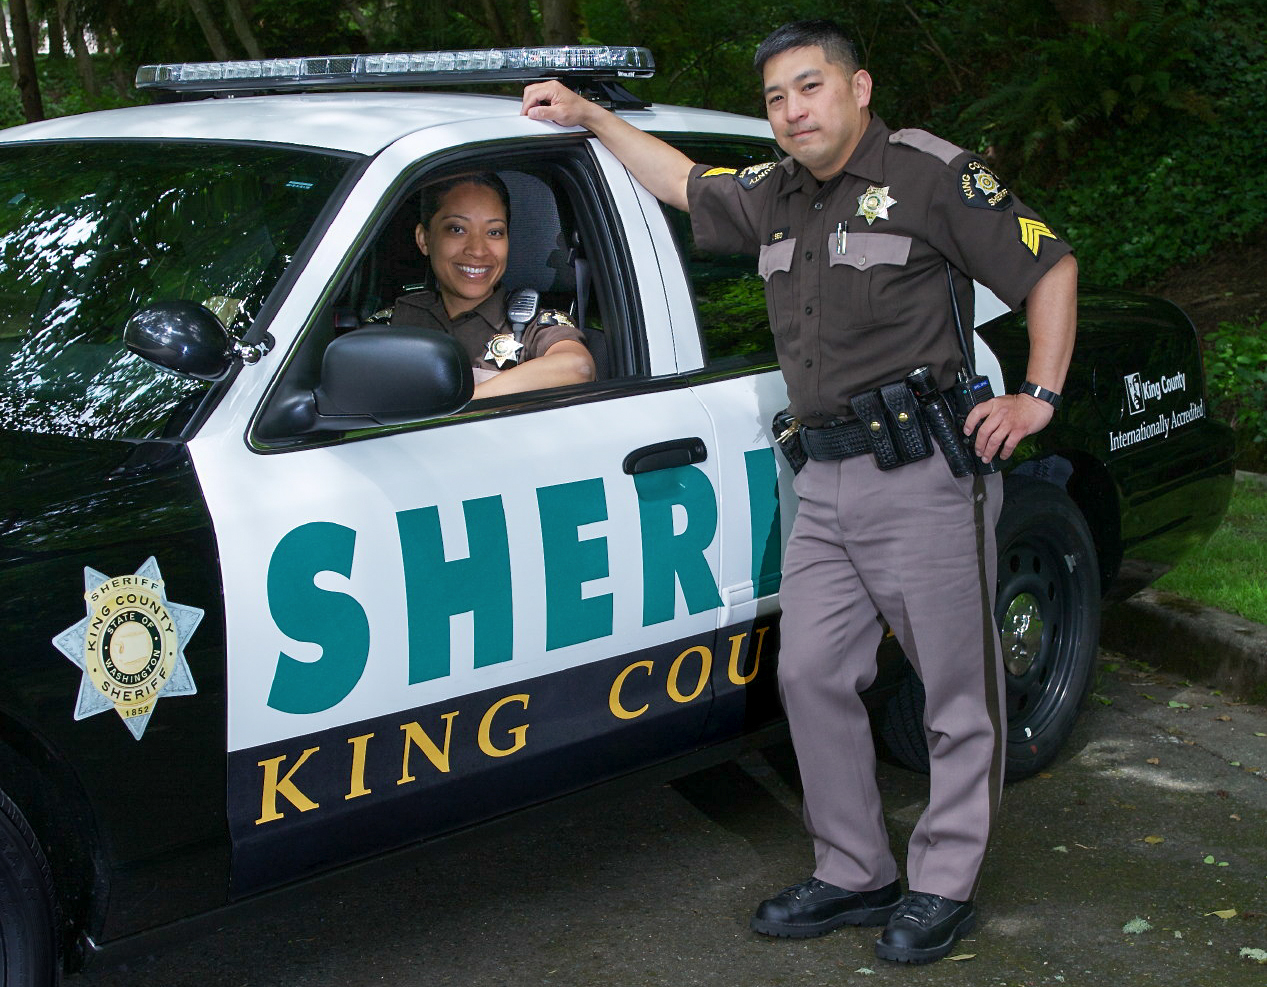 King County Sheriff's car and deputies